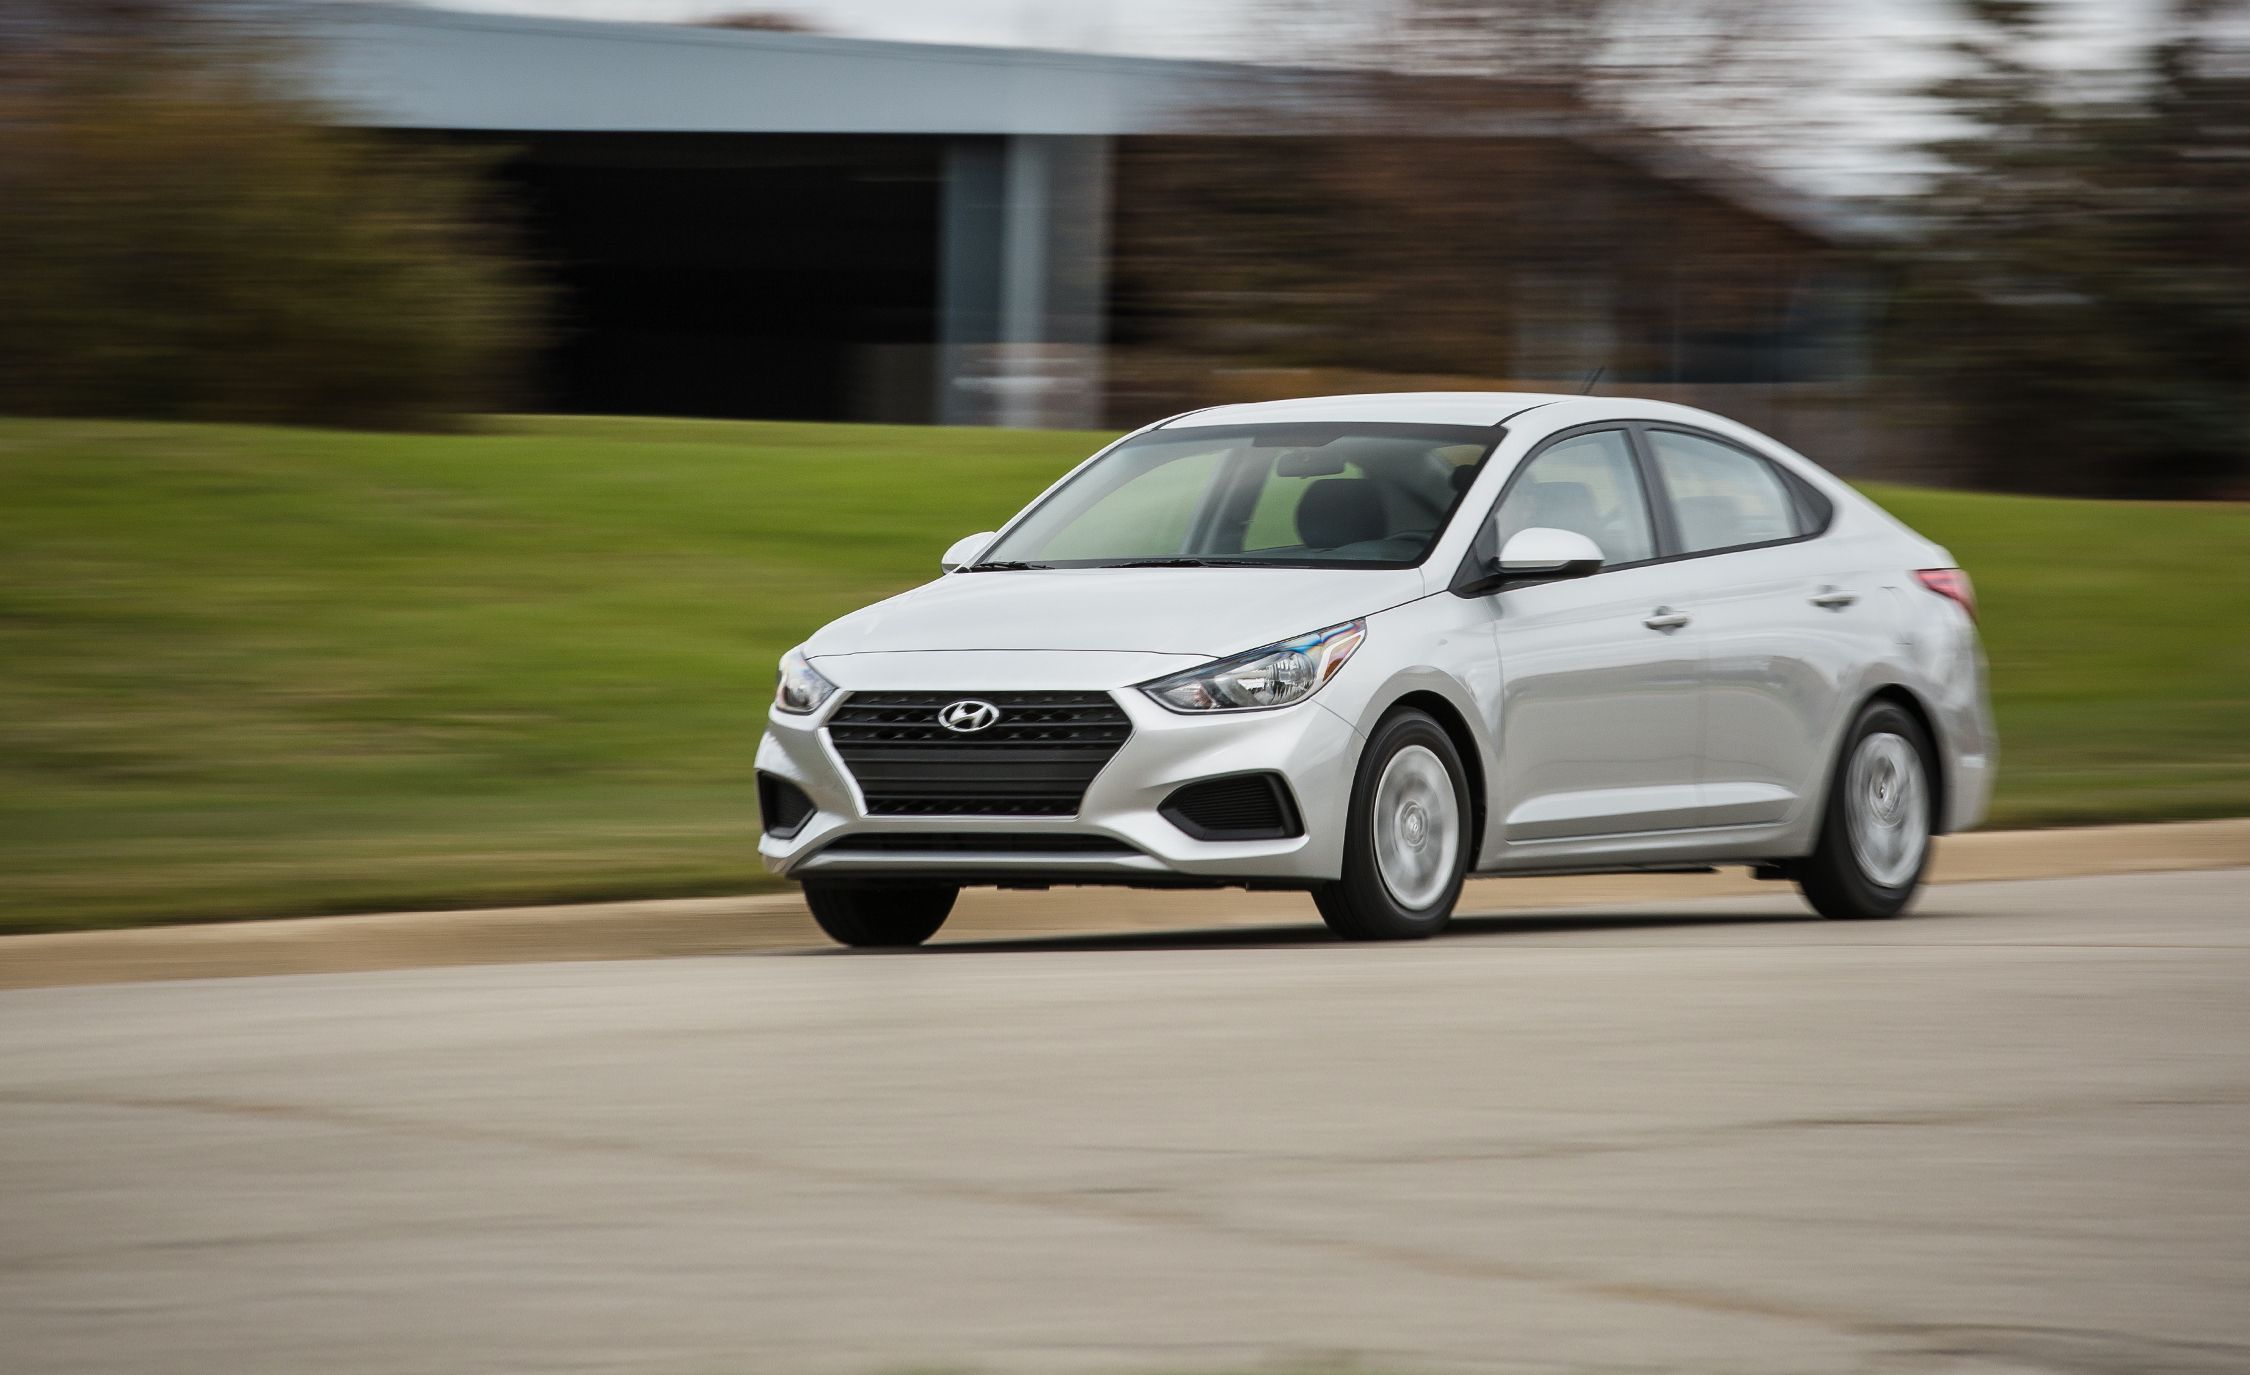 2019 Hyundai Accent Reviews | Hyundai Accent Price, Photos, and Specs ...